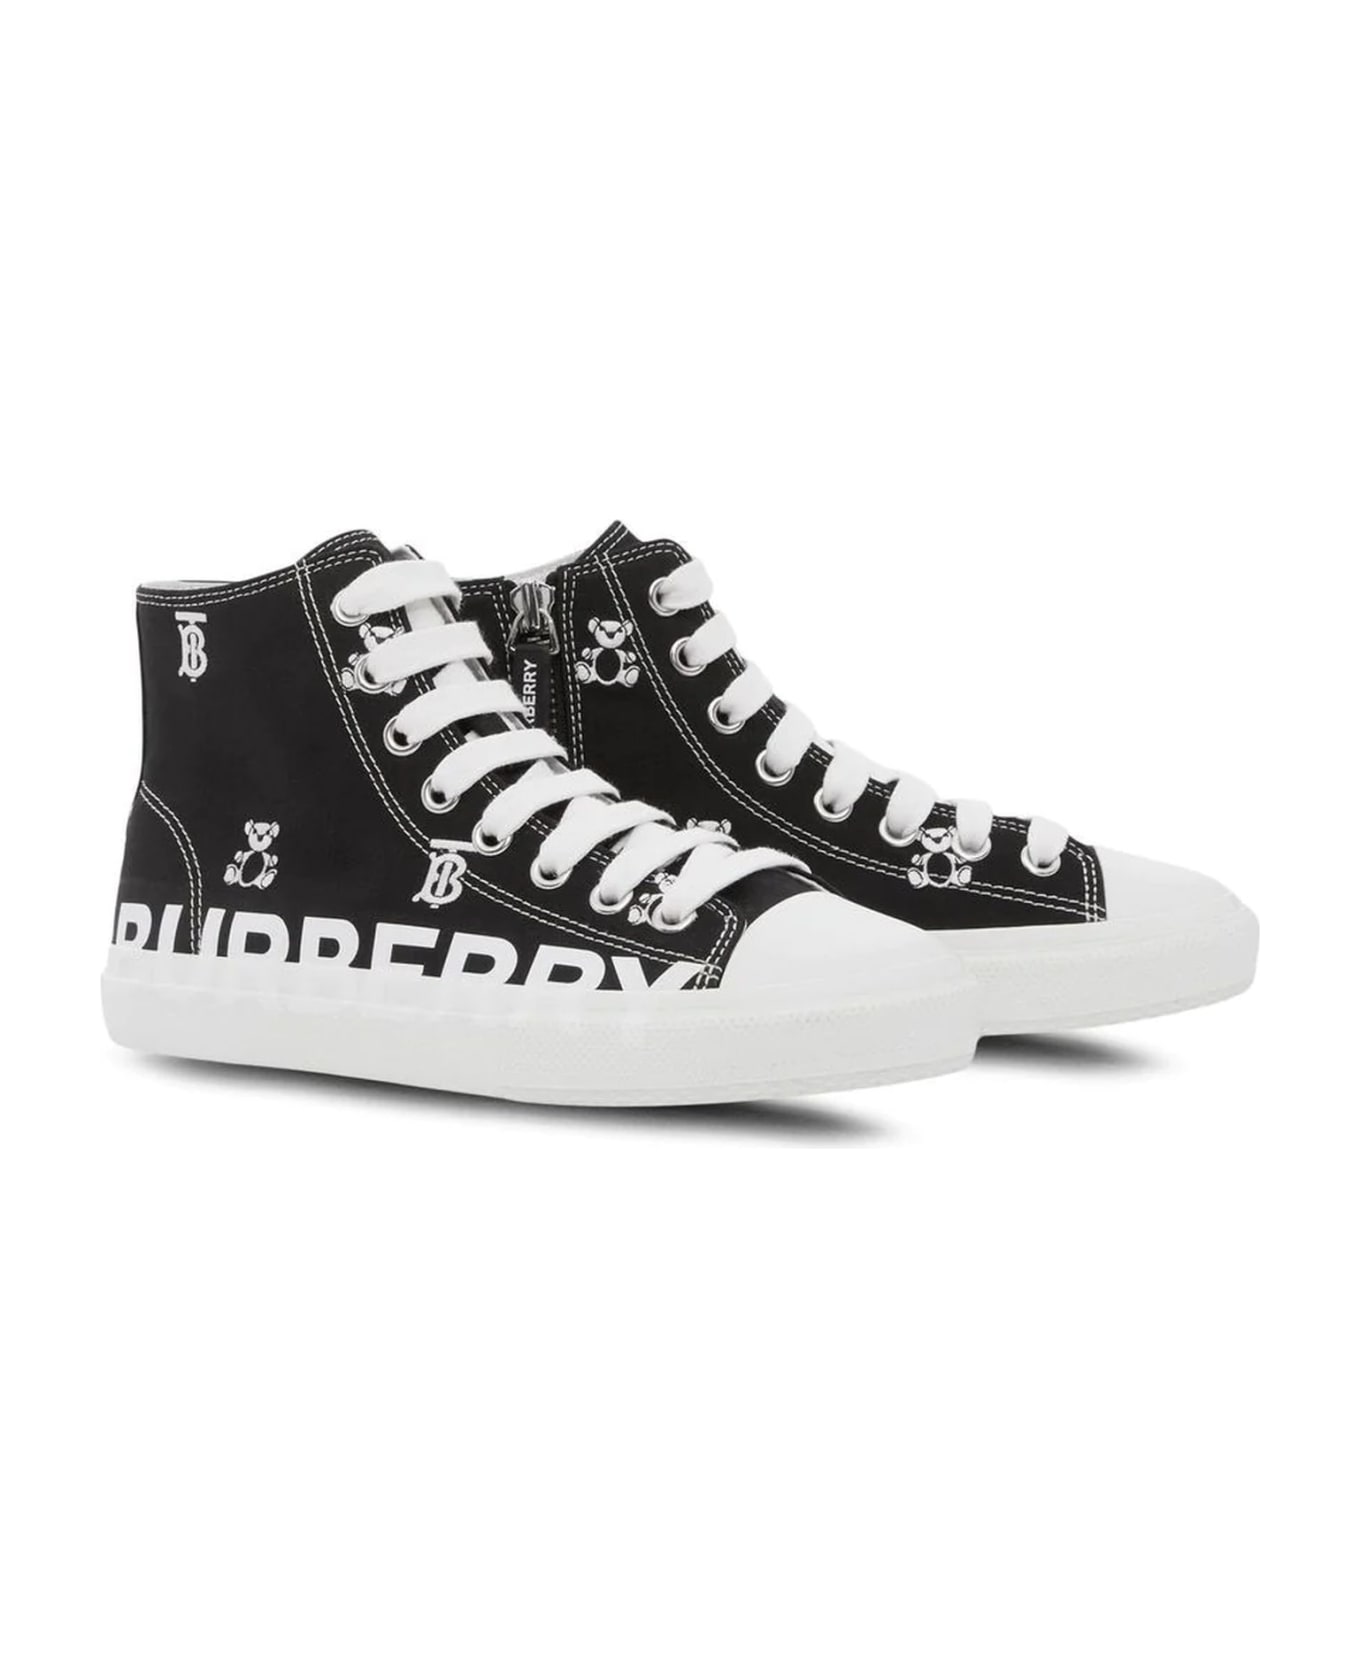 Burberry Black Fabric Sneakers - Nero